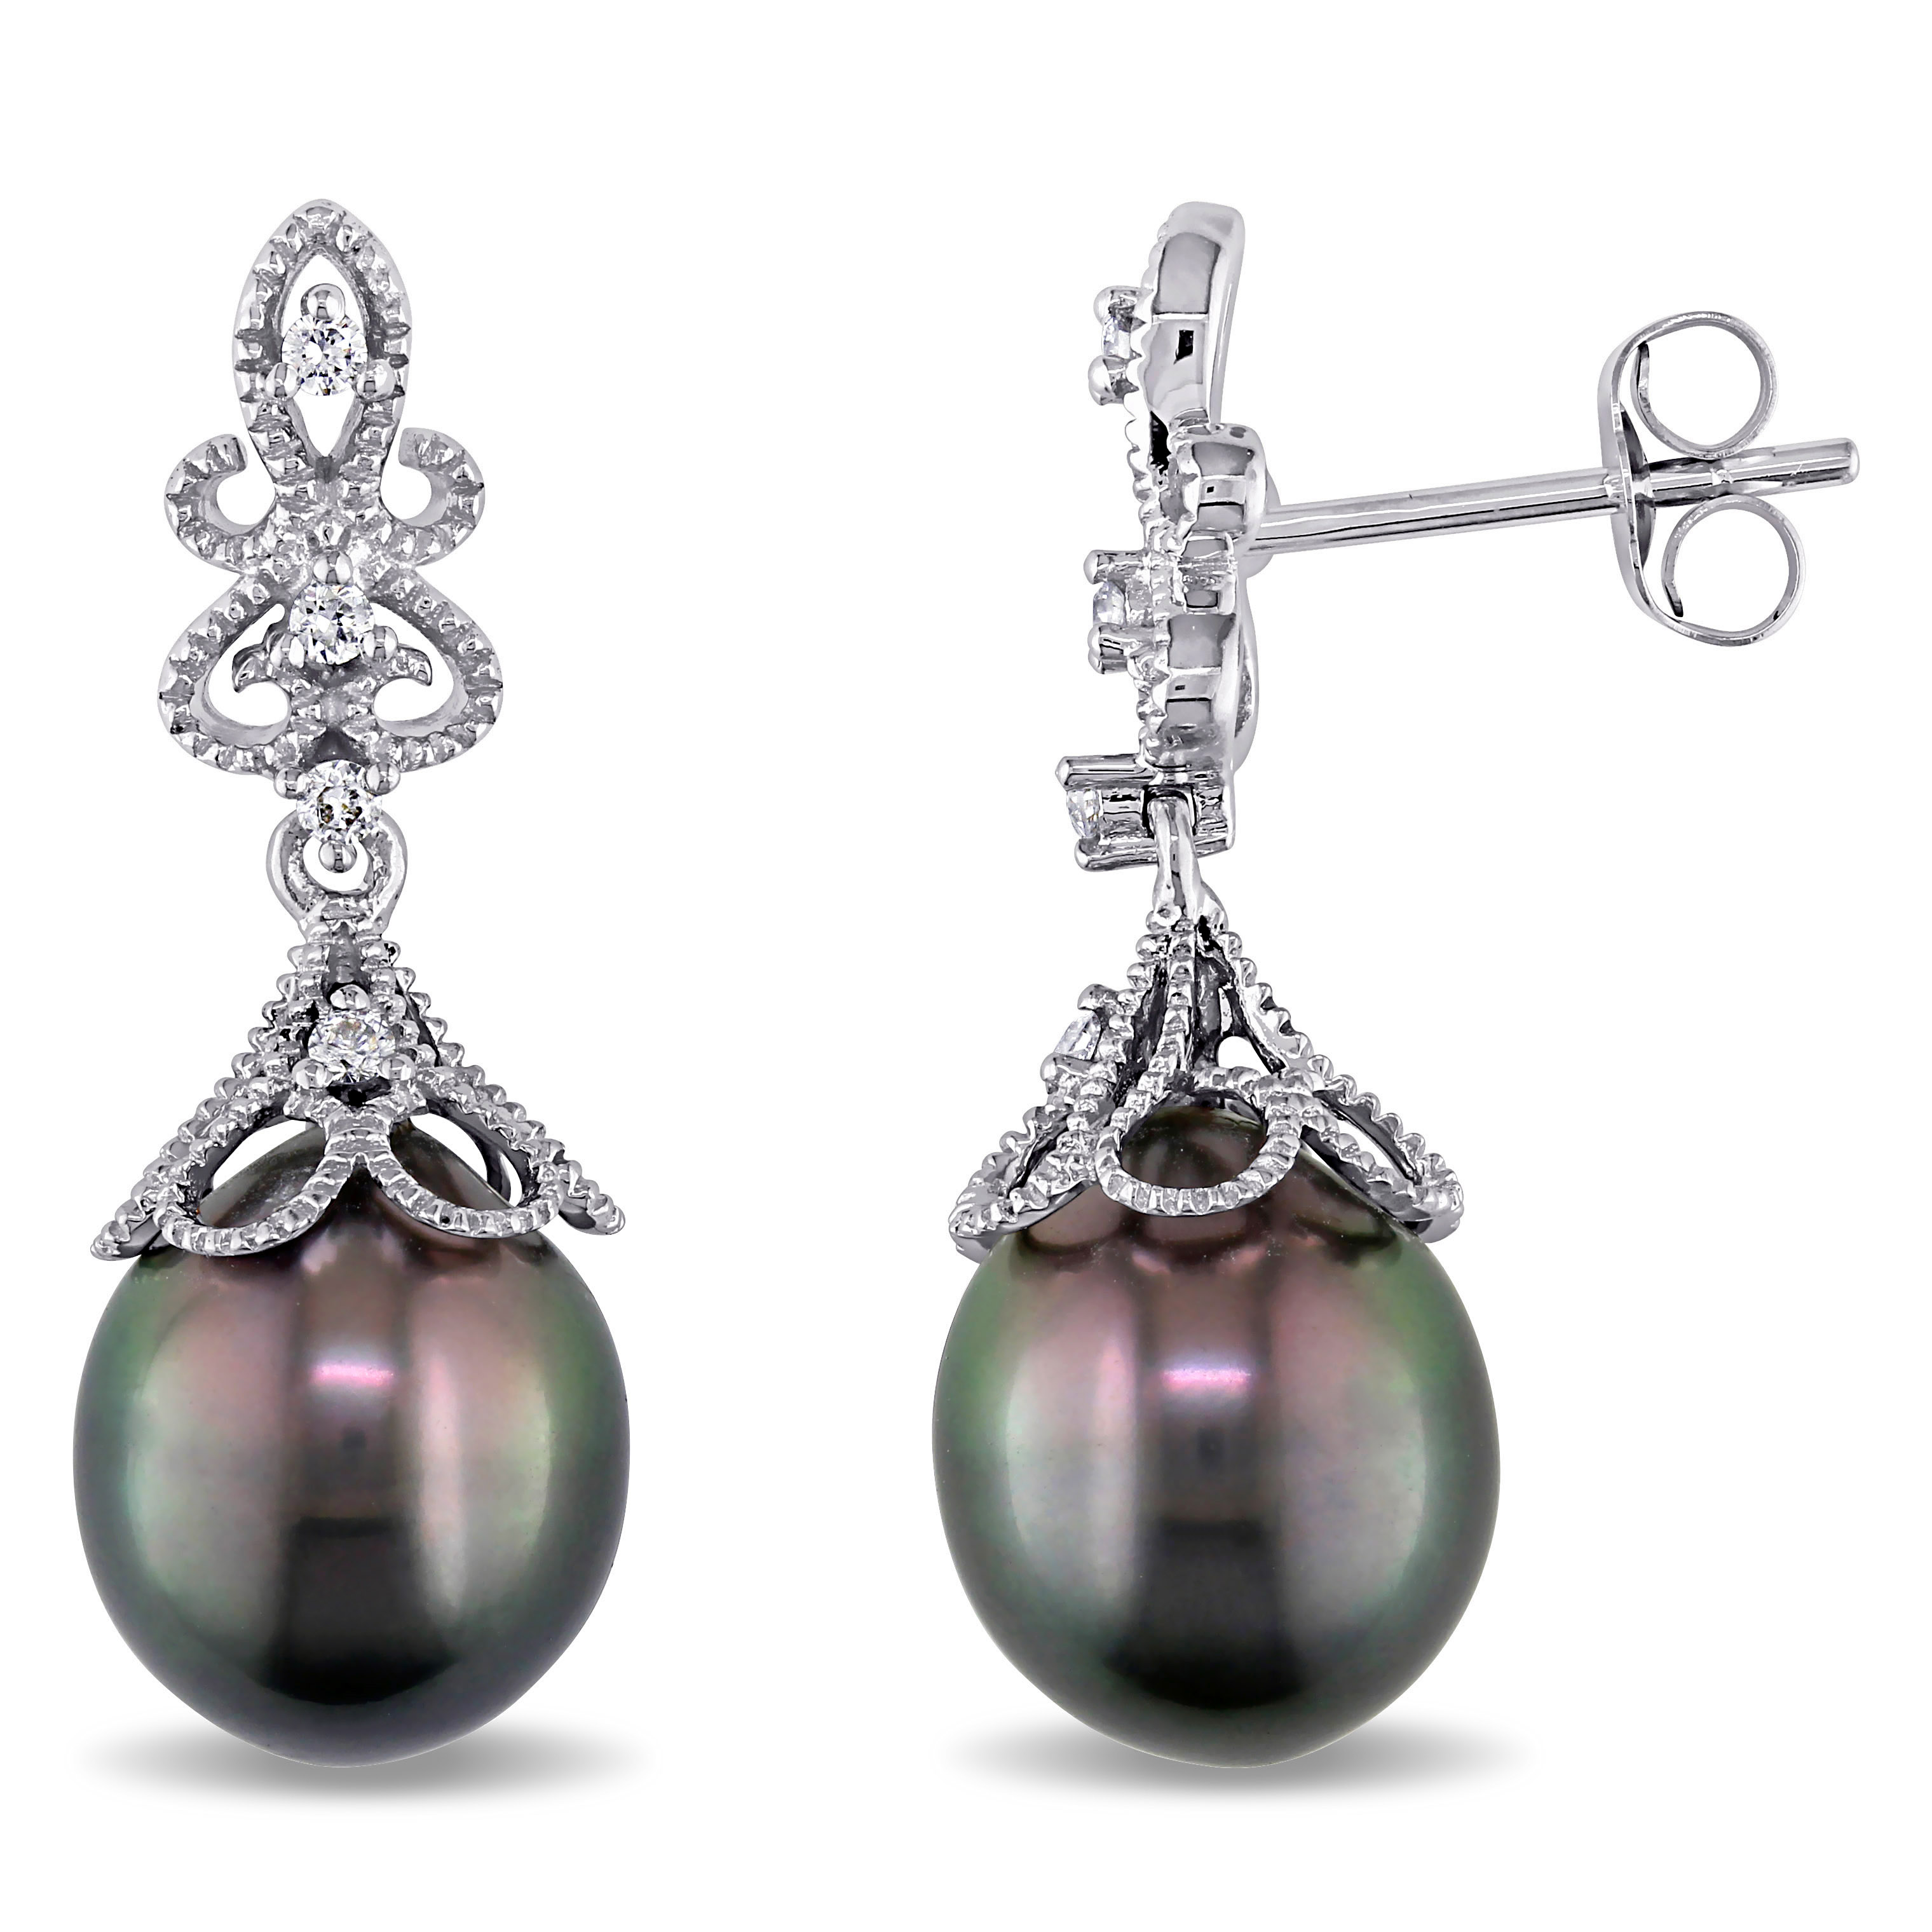 9 - 9.5 MM Black Tahitian Pearl and 1/10 CT TW Diamond Vintage Drop Earrings in 14k White Gold